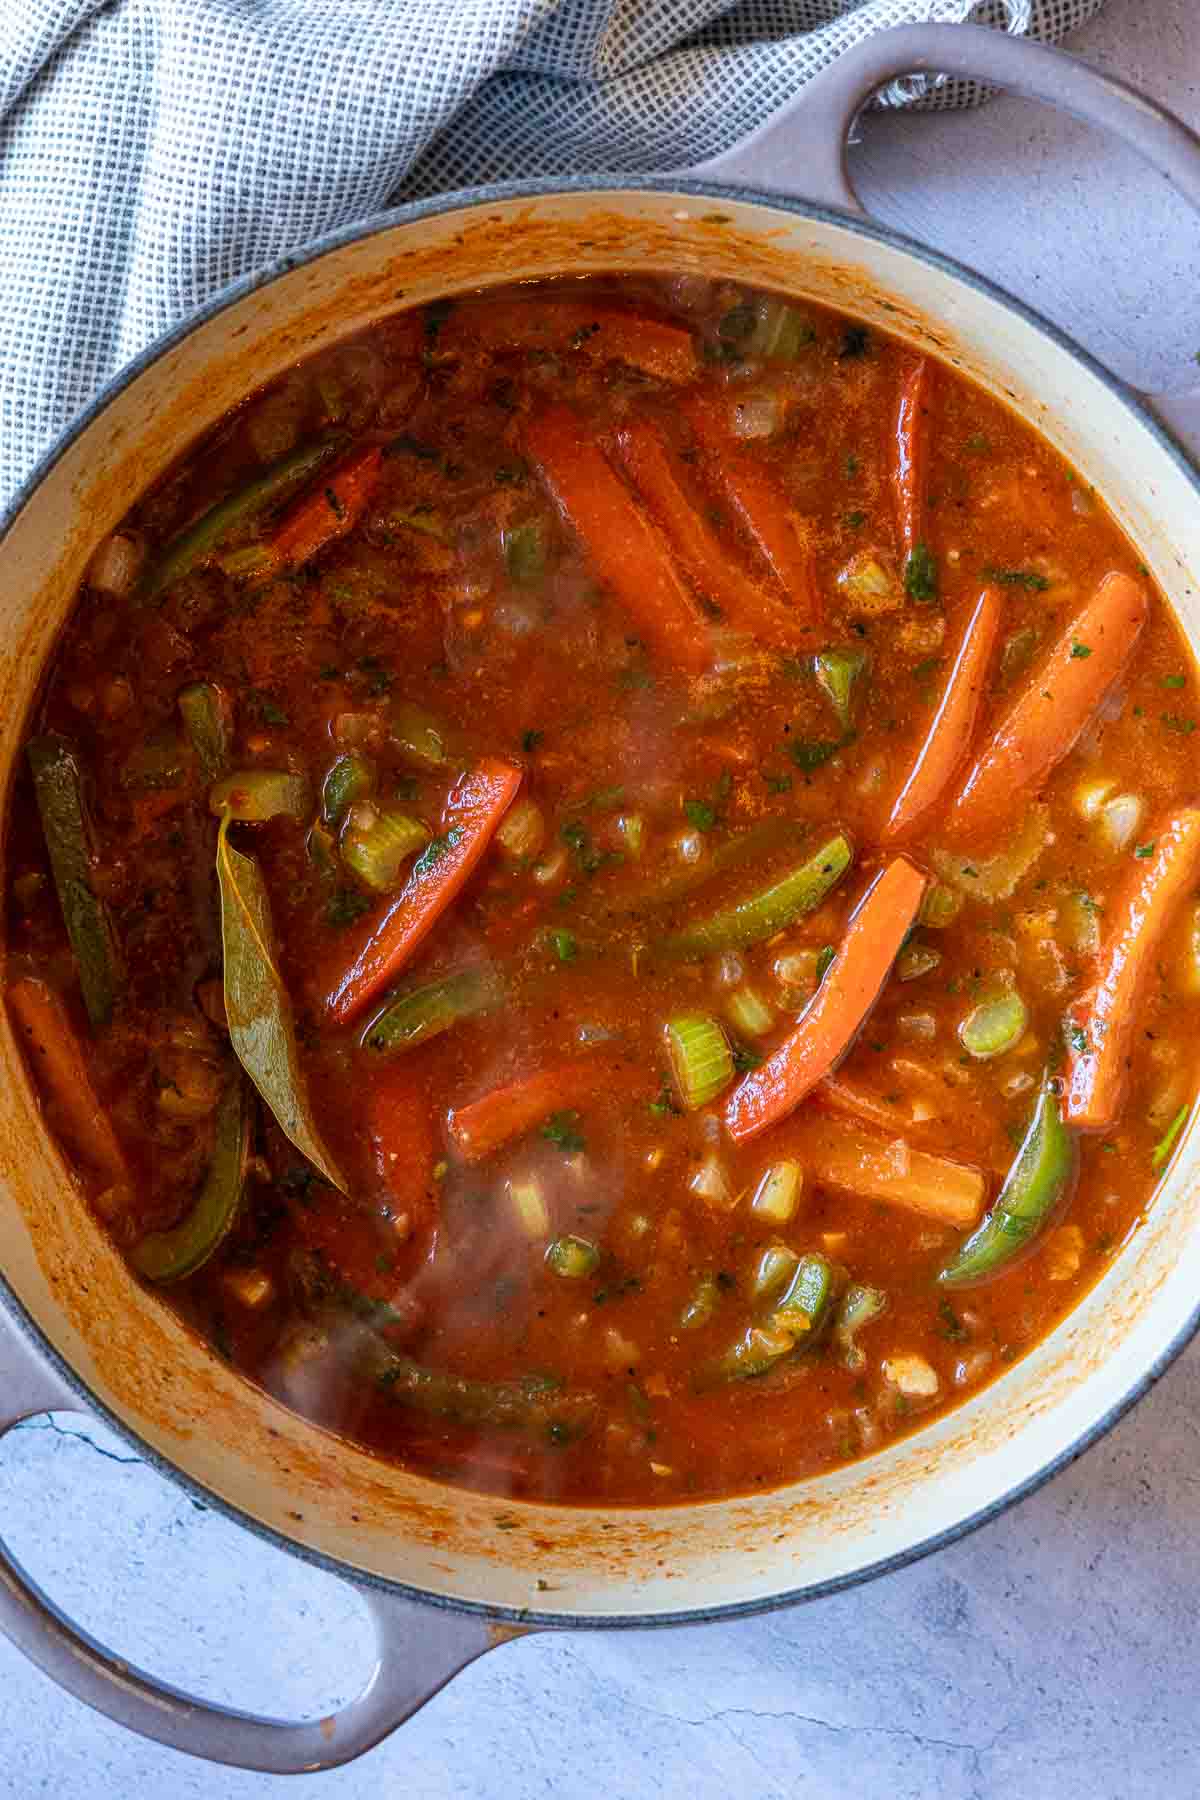 Add tomato sauce to vegetables to make shrimp stew.